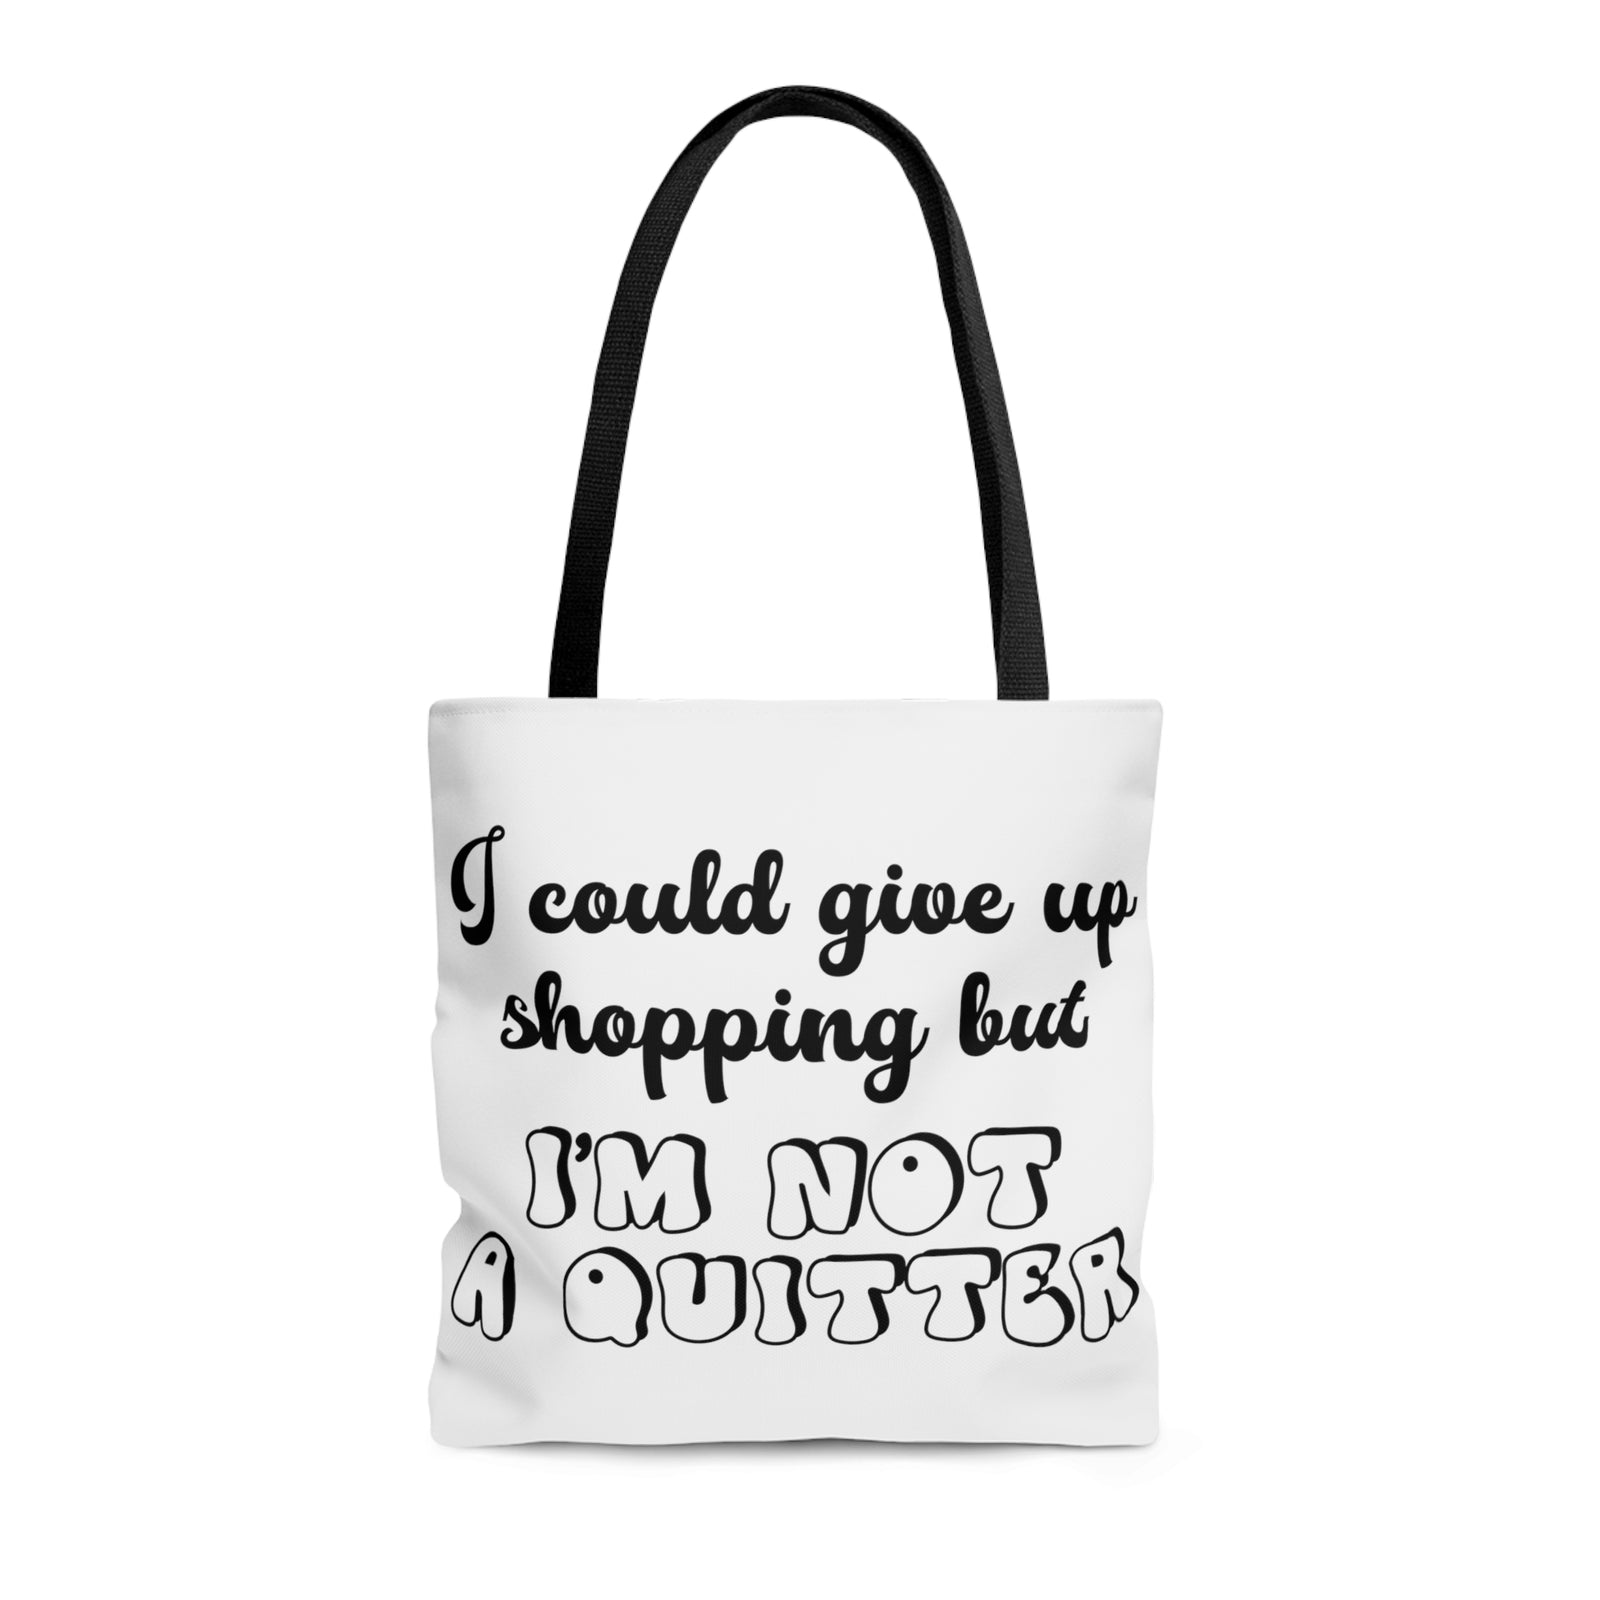 Give up shopping - Sarcasm Swag